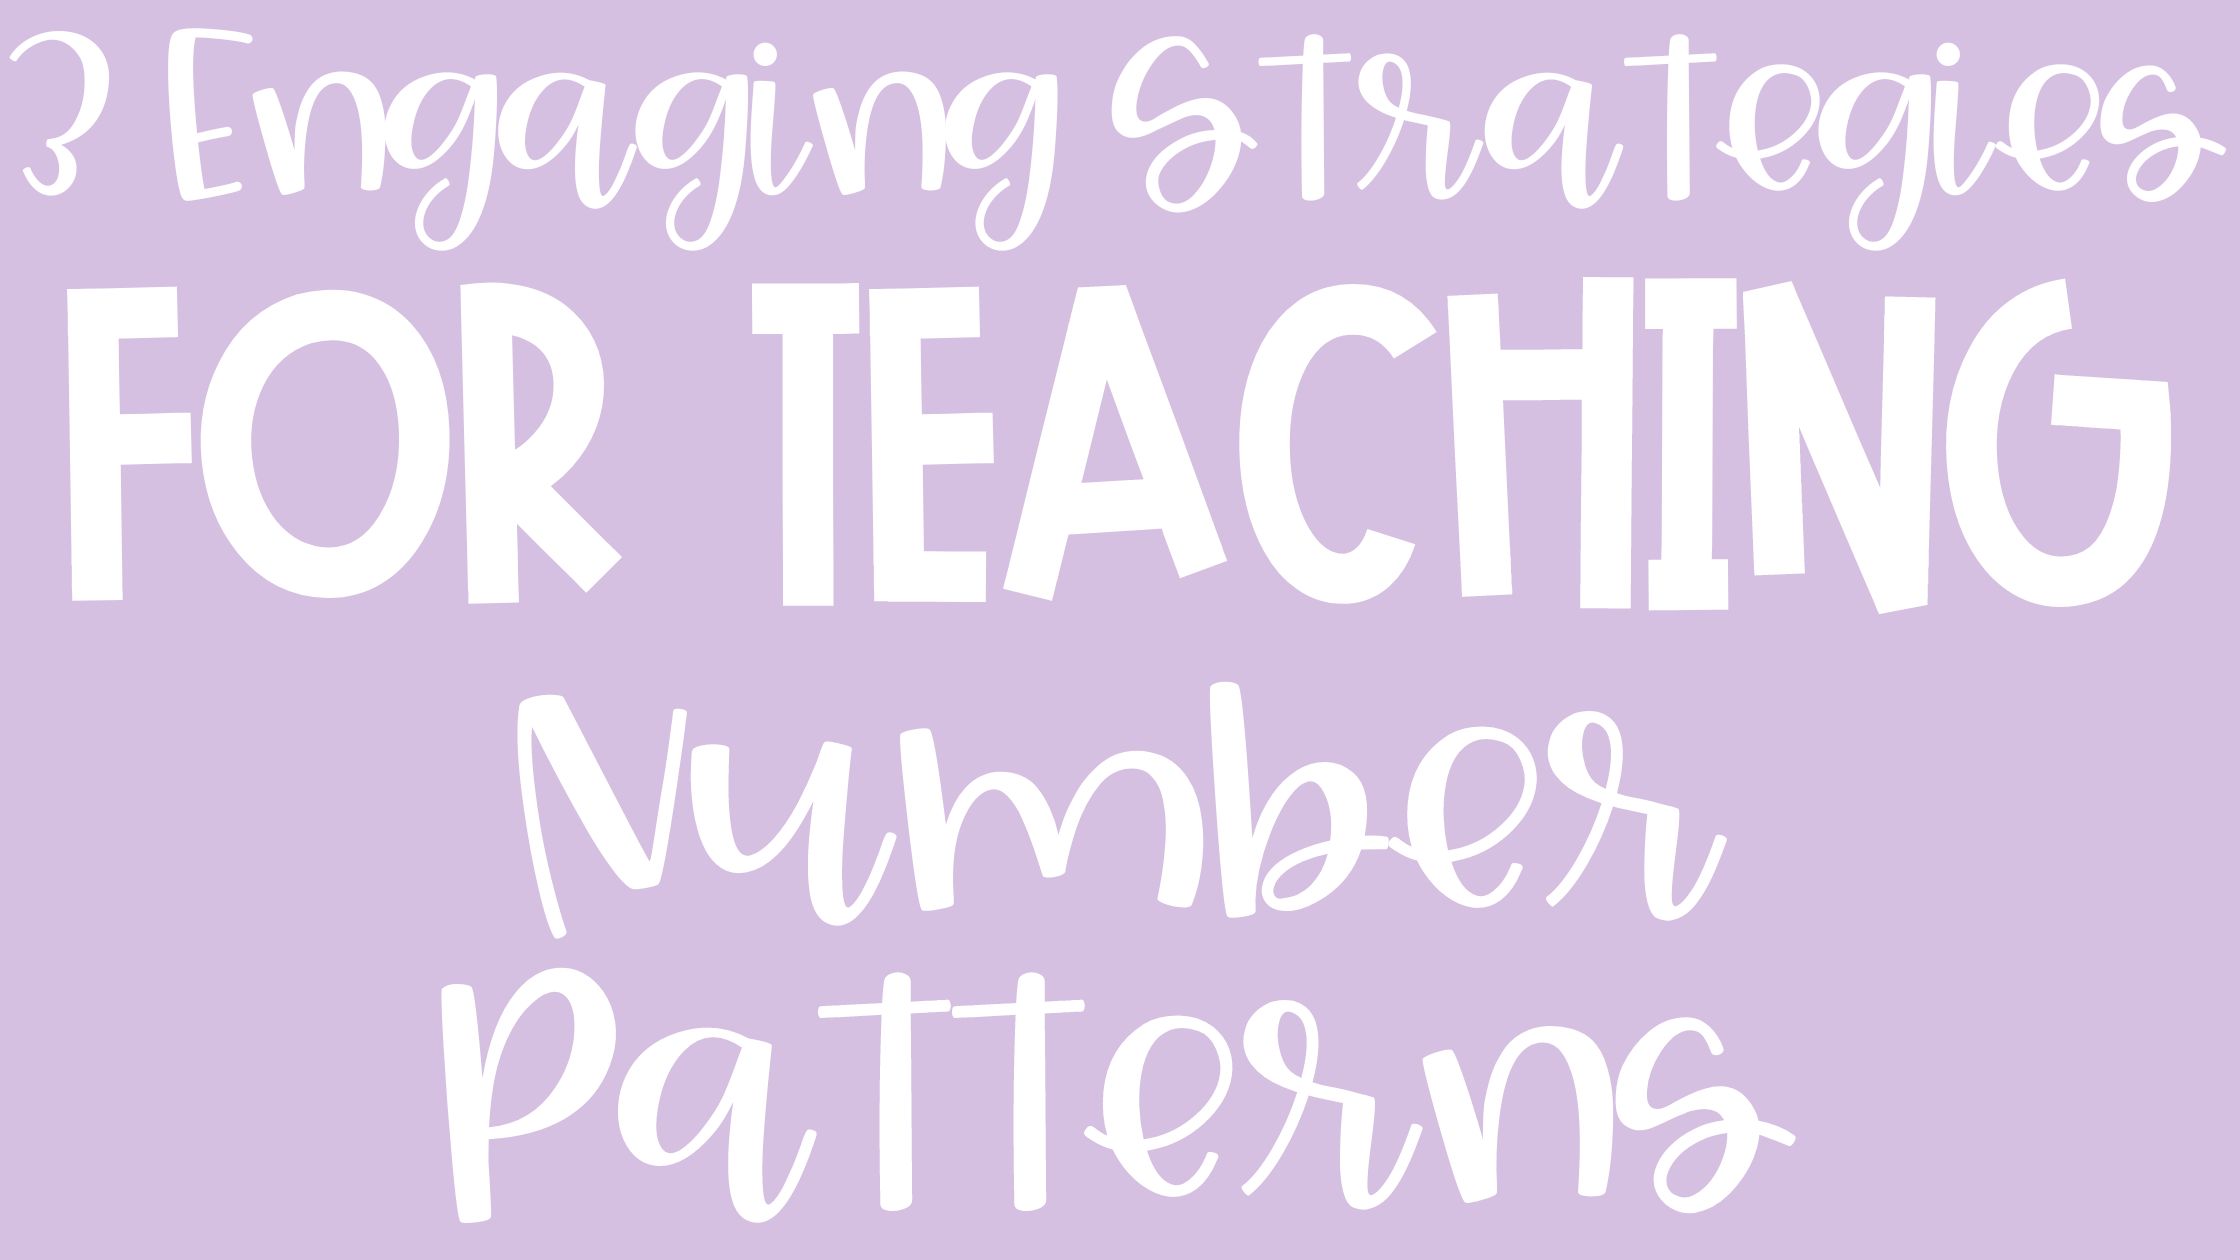 3 Engaging Strategies for Teaching Number Patterns Blog Post Header Image